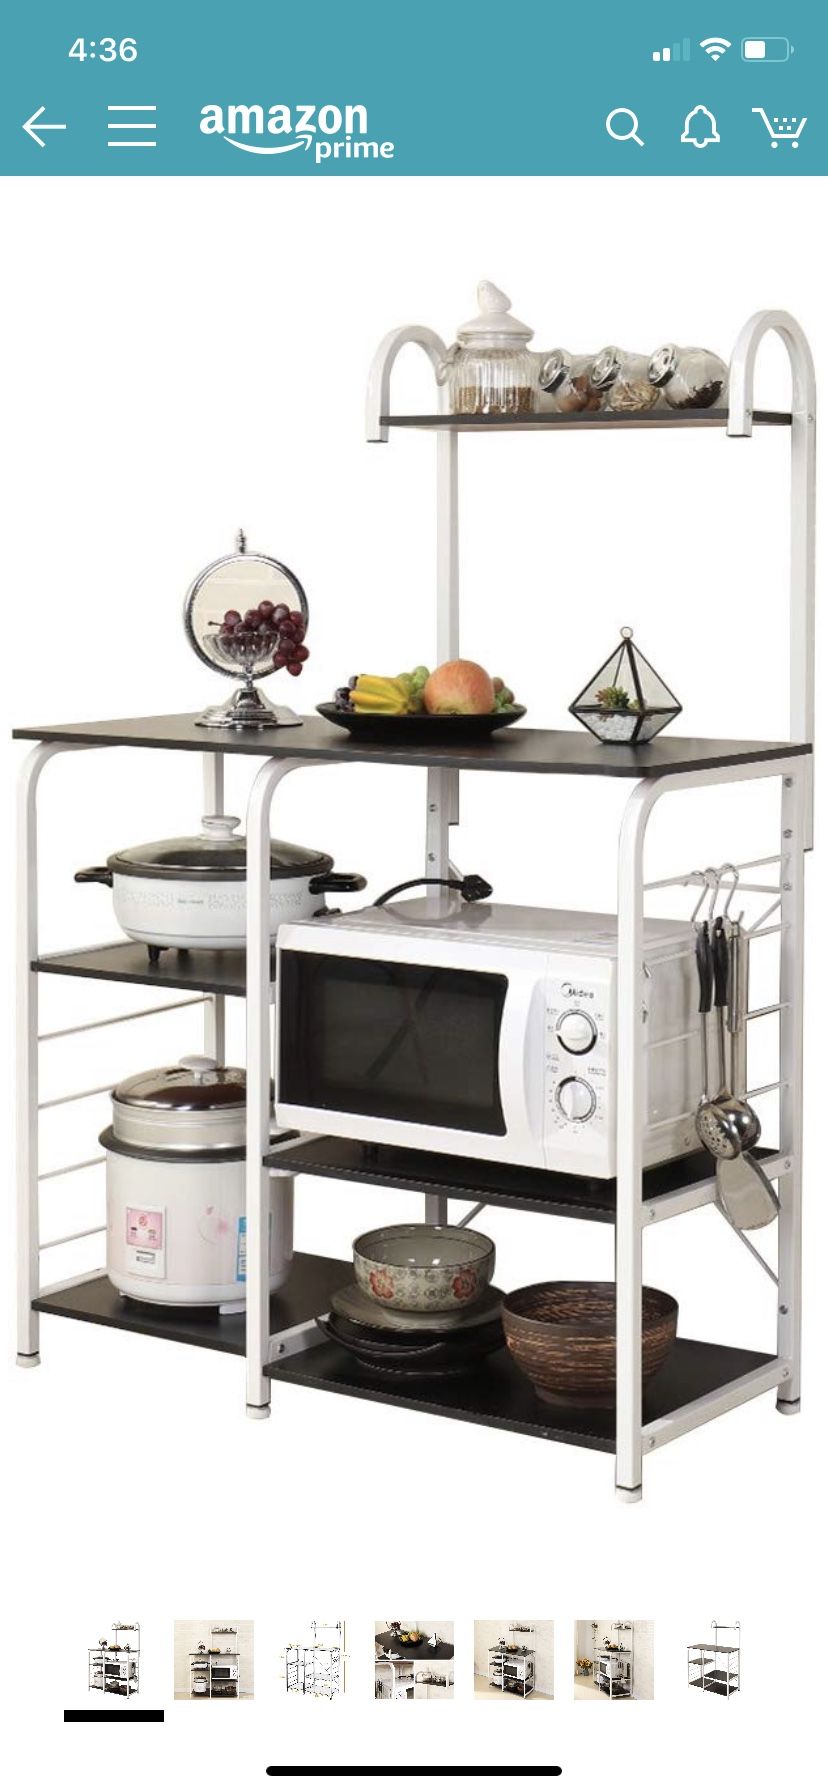 Multi-Functional Kitchen Baker's Rack Utility Microwave Oven Stand Storage Cart Workstation Shelf, Black Brown